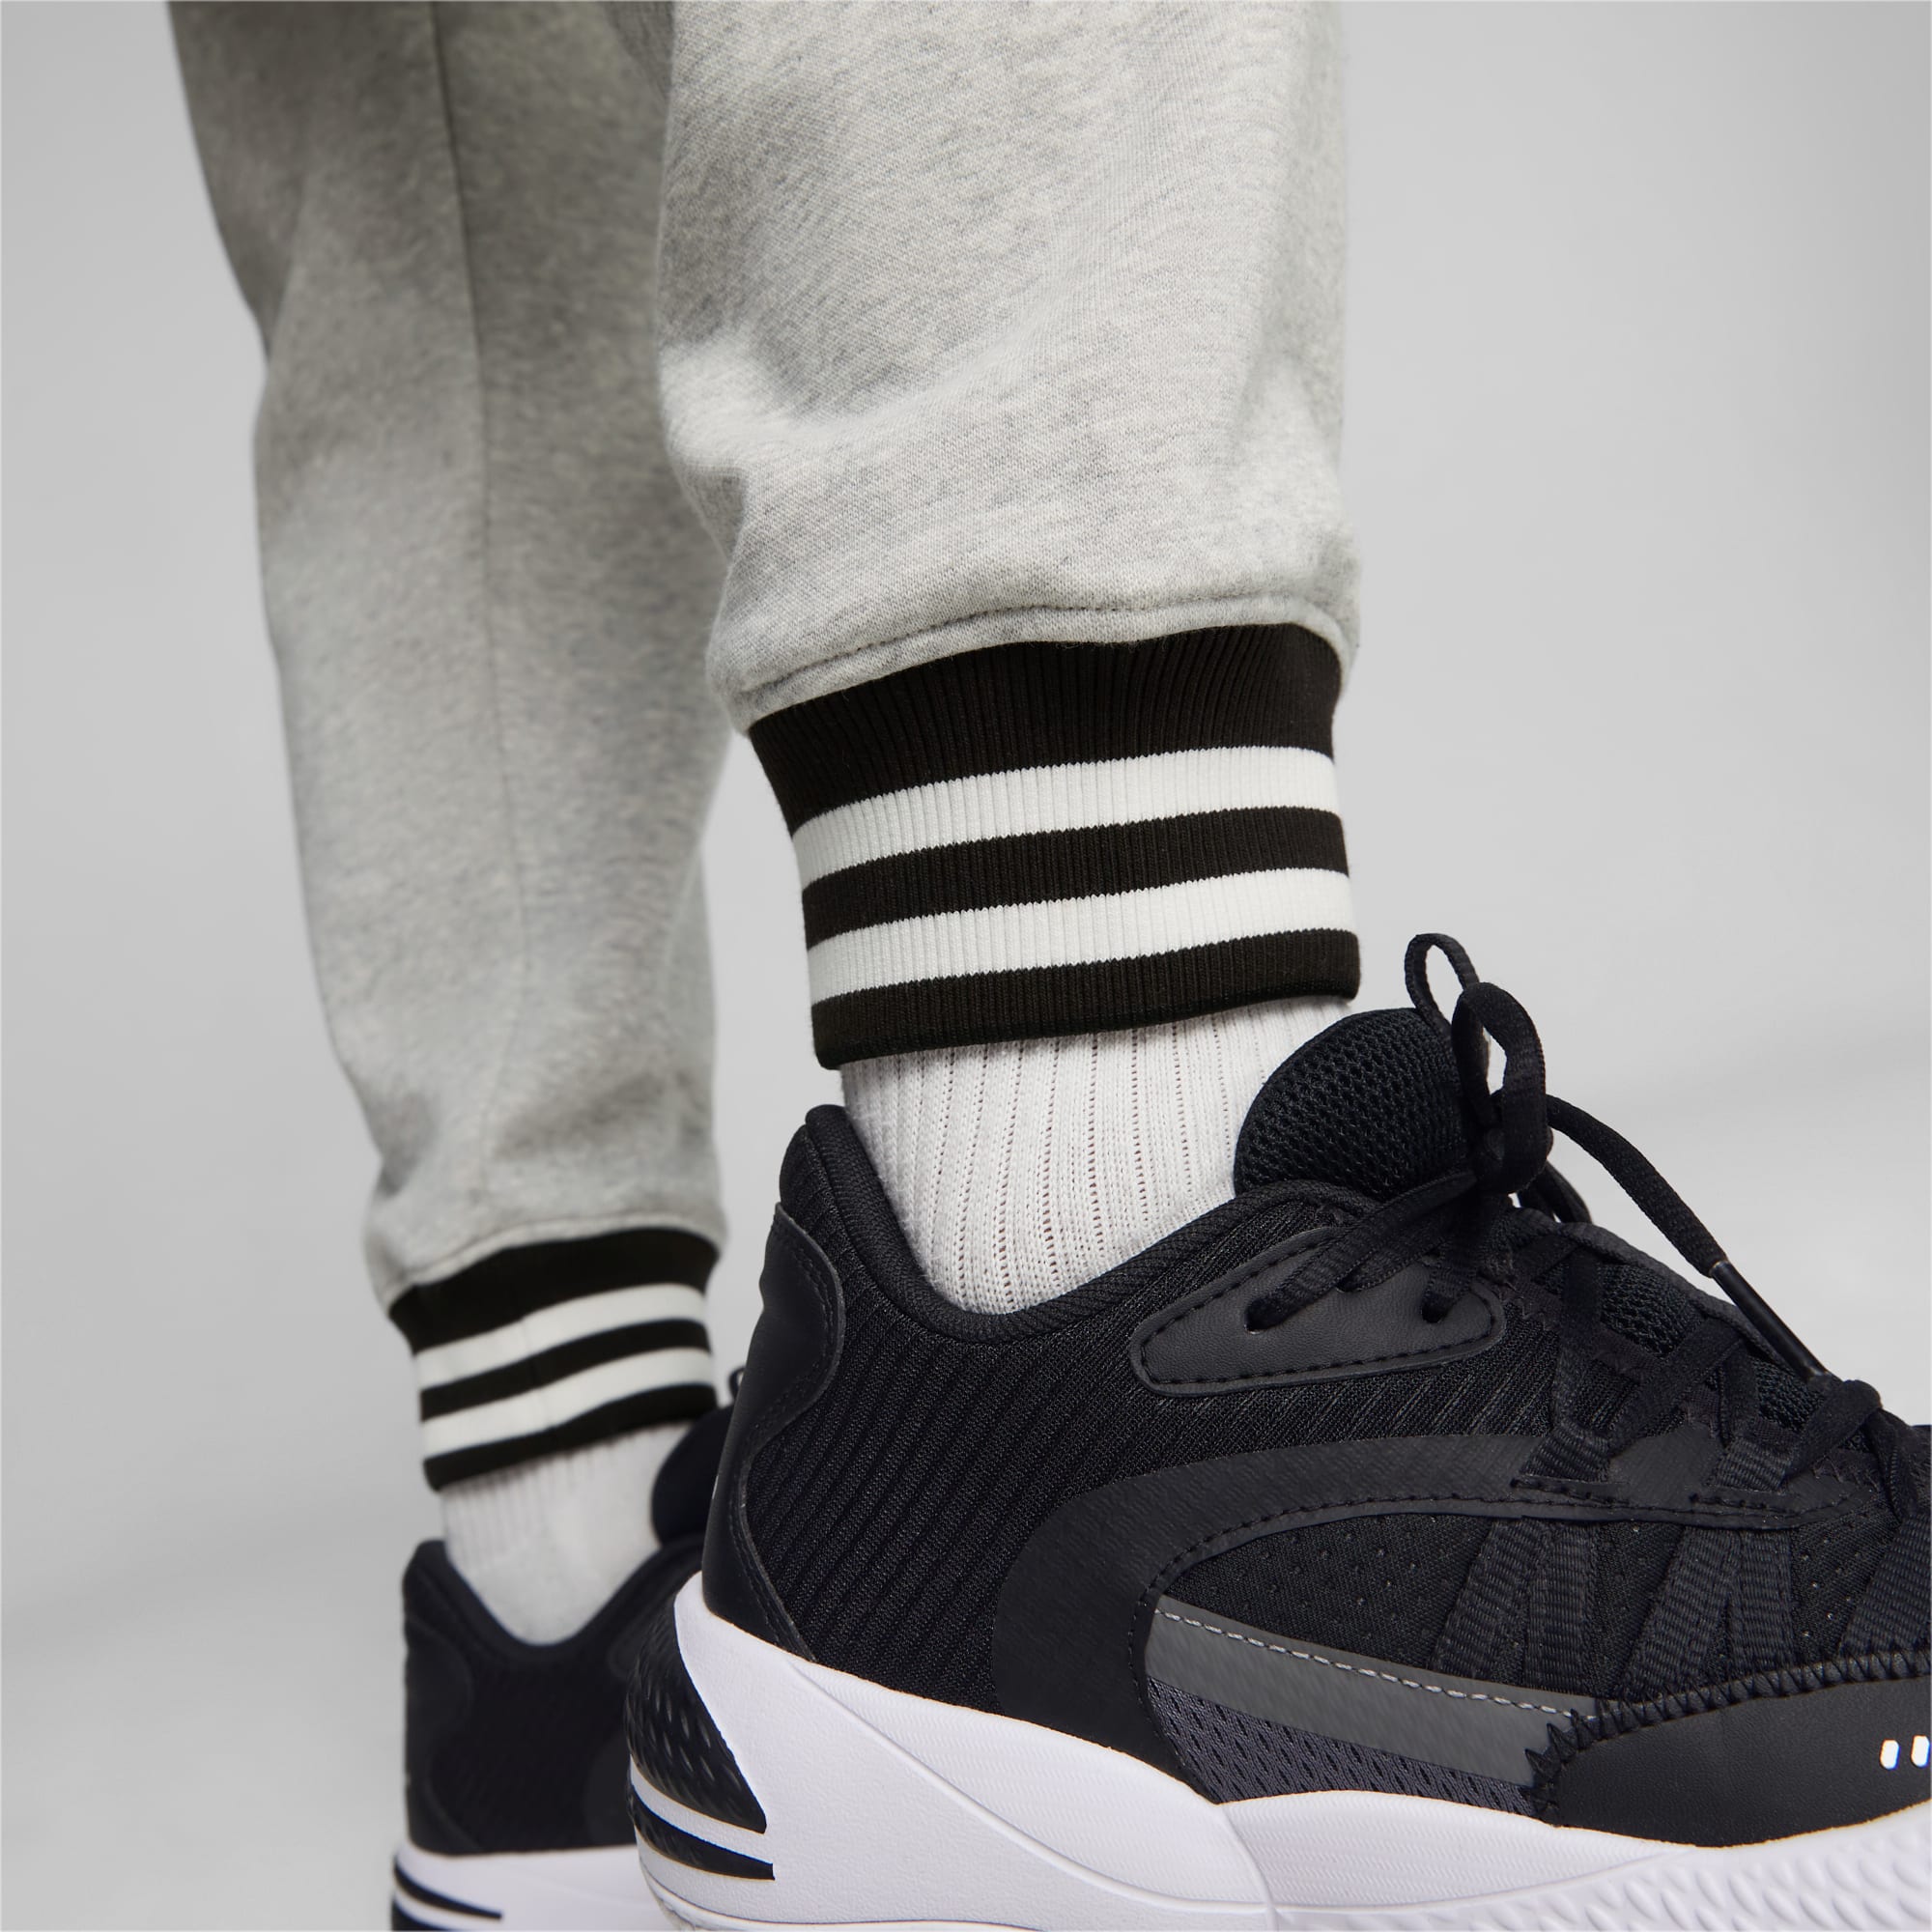 Men's PUMA Franchise Core Basketball Sweatpants, Light Grey Heather/Black